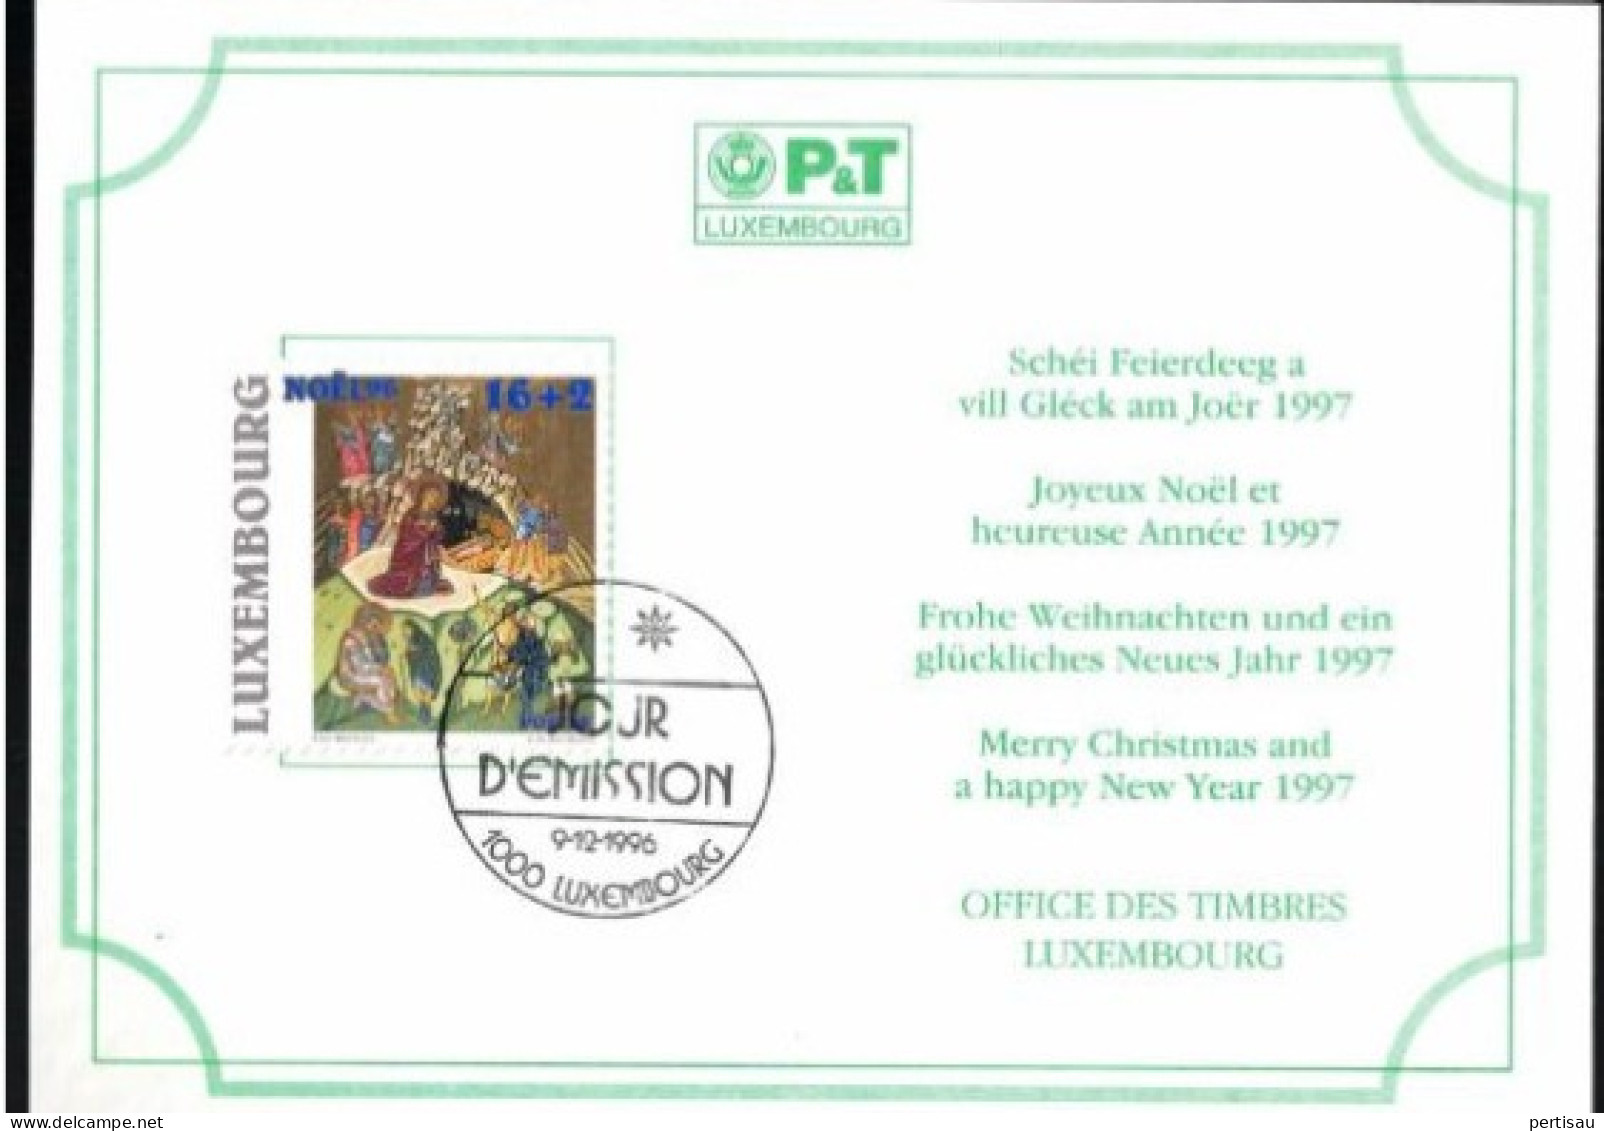 Wenskaart Joyeux Noel Et Heureuse Annee 1997 Speciale Afstempeling 1996 - Commemoration Cards